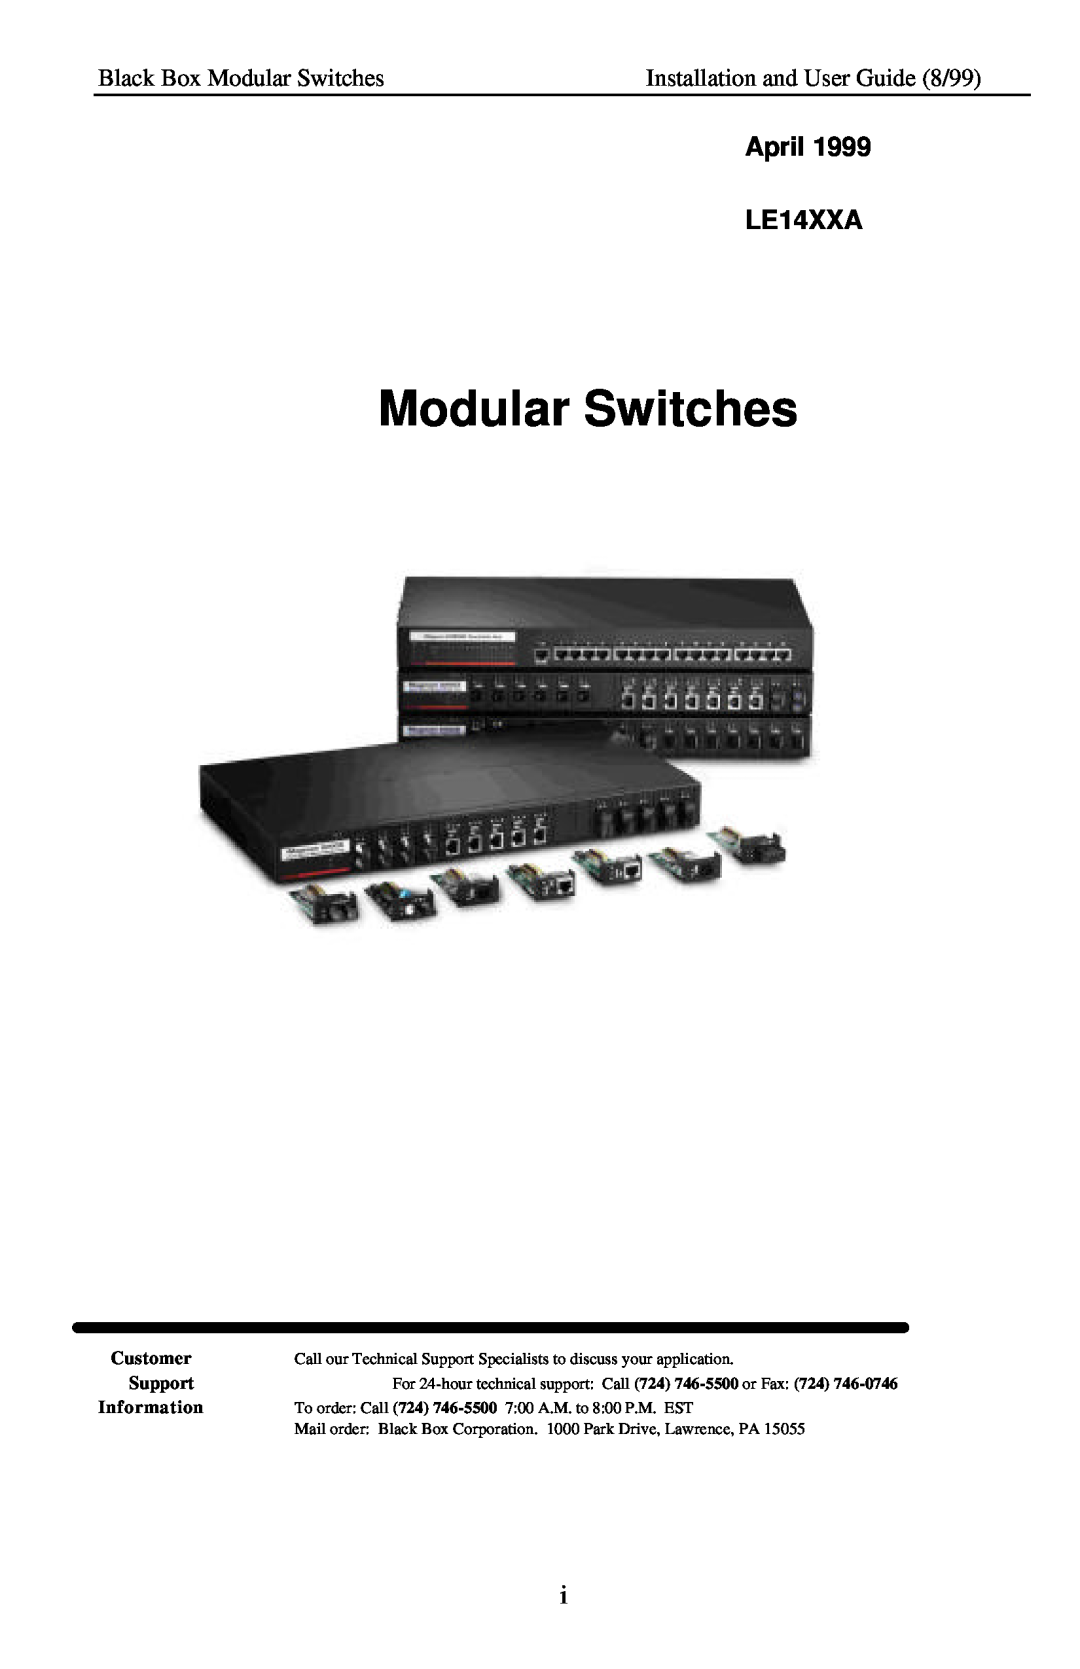 Black Box manual Modular Switches, April LE14XXA 